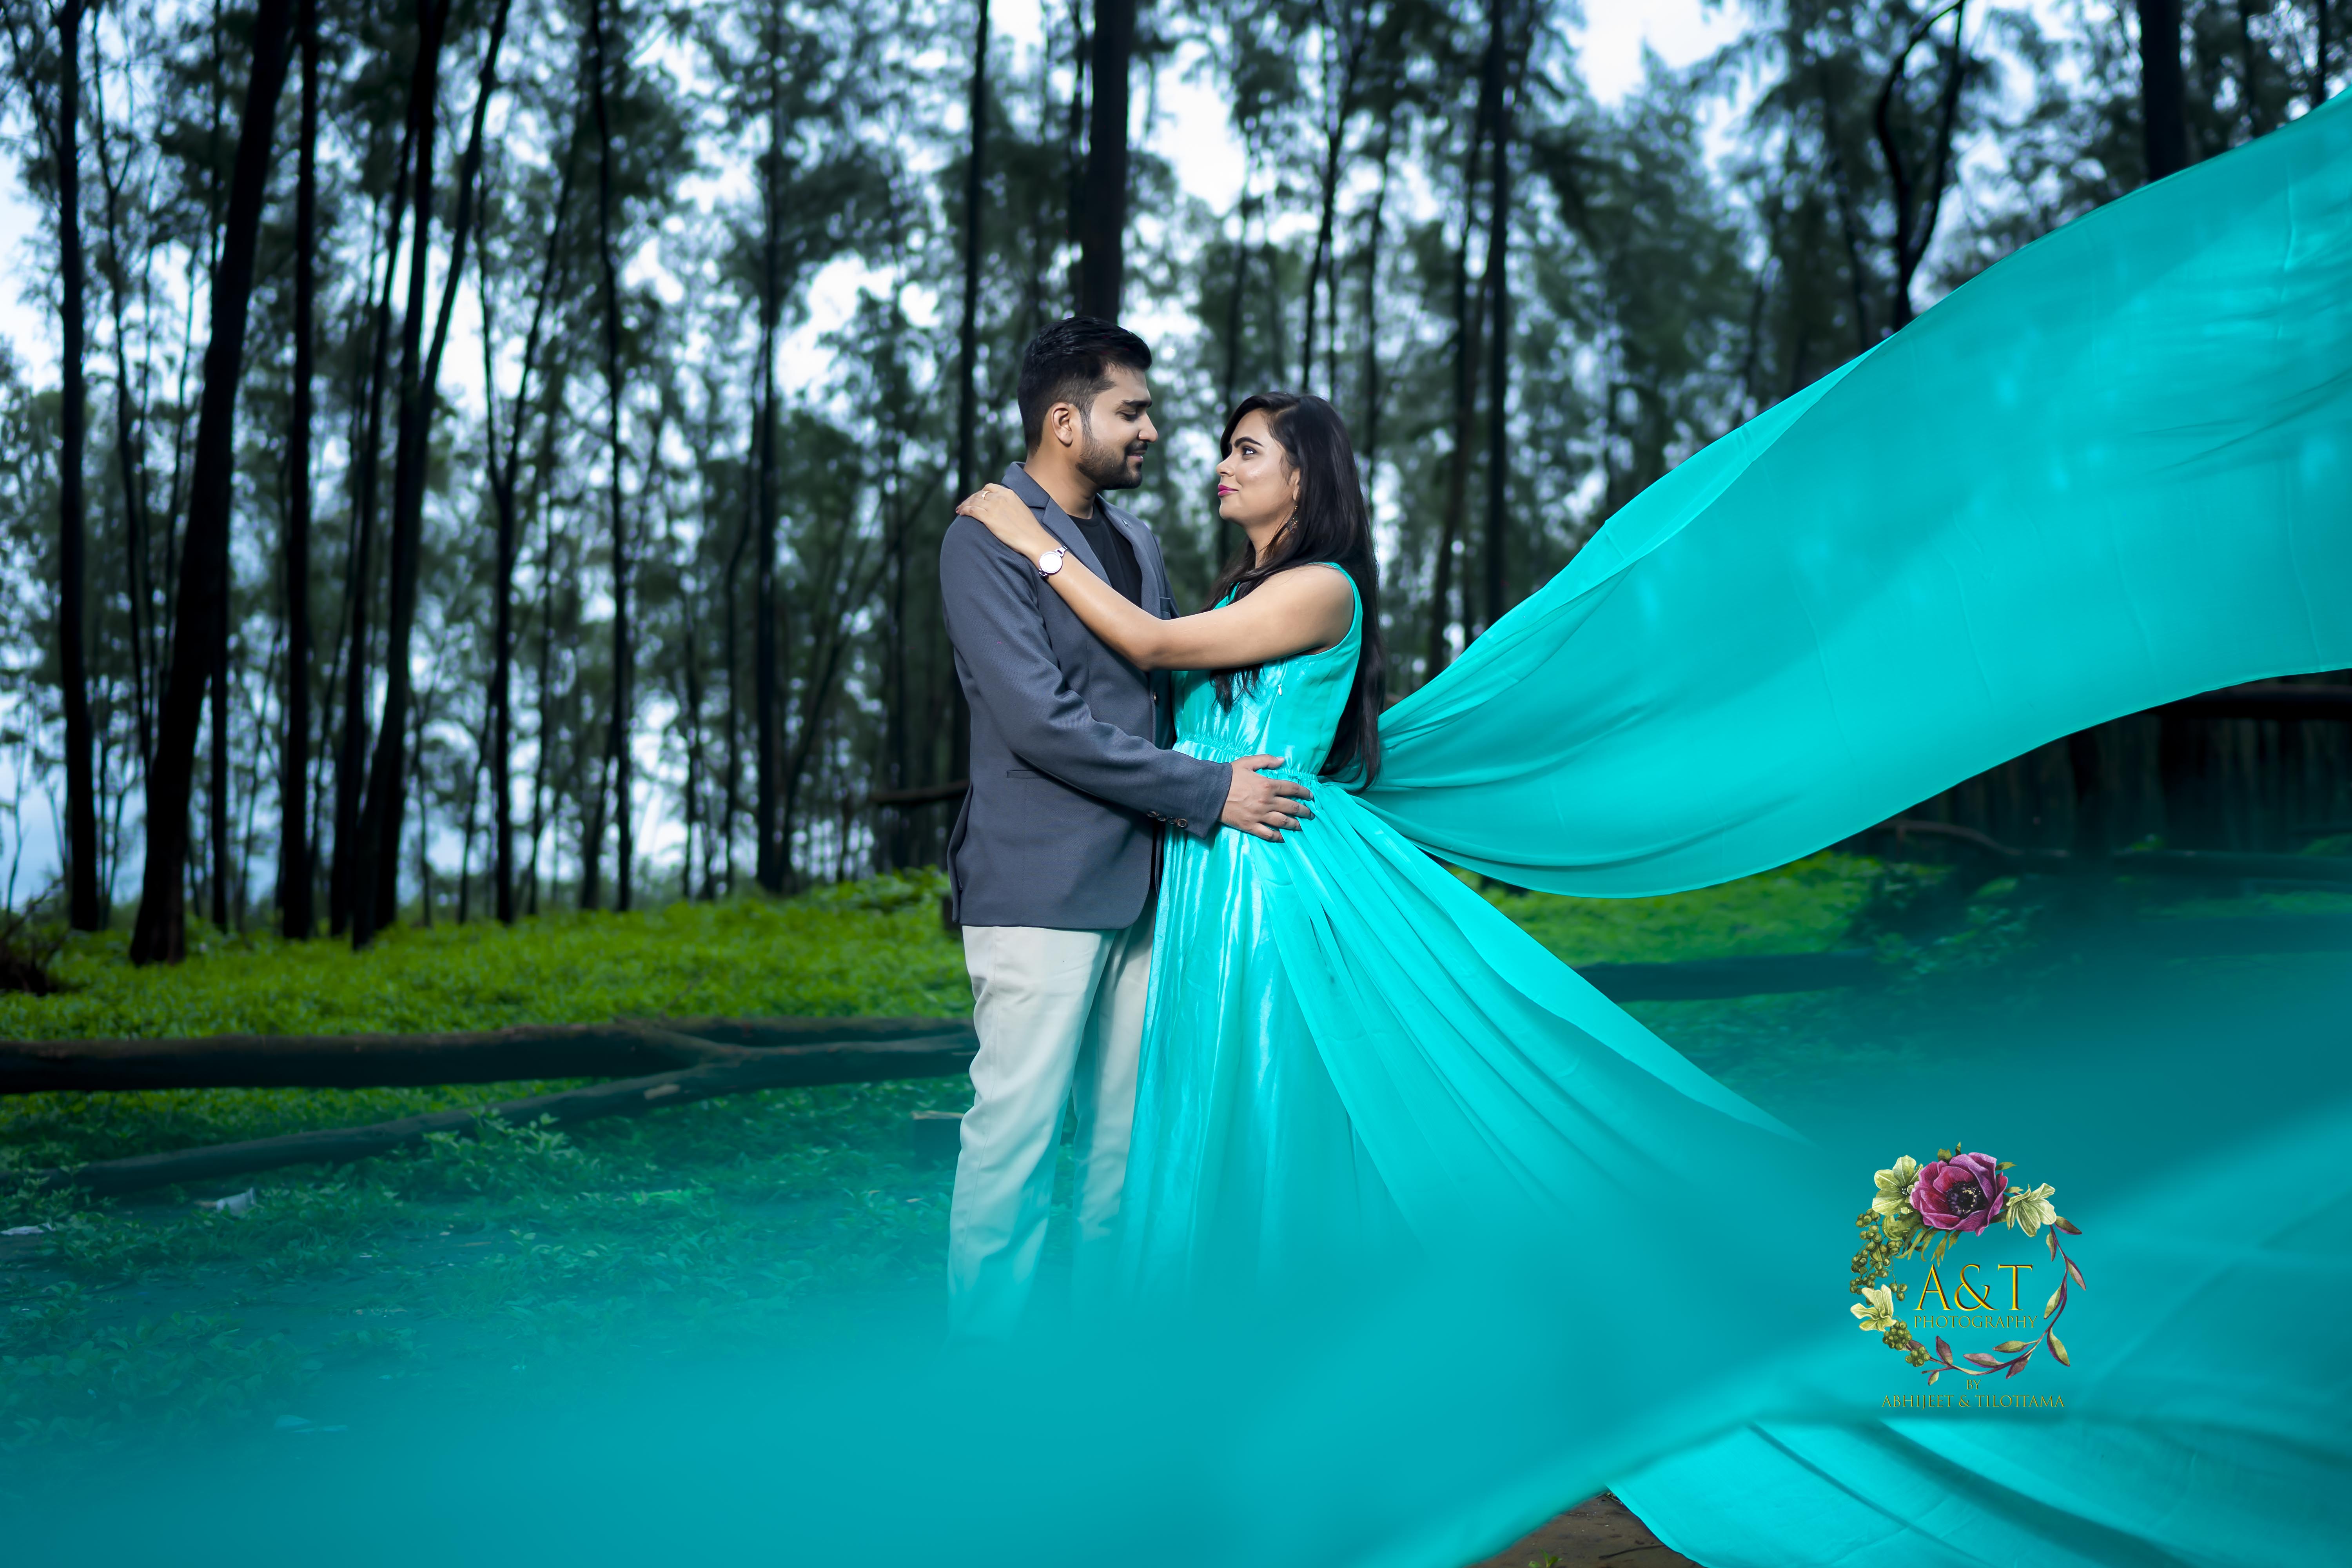 Vandana-Monil|A&T Photography - The Best Pre-wedding Photographers in Pune|India 